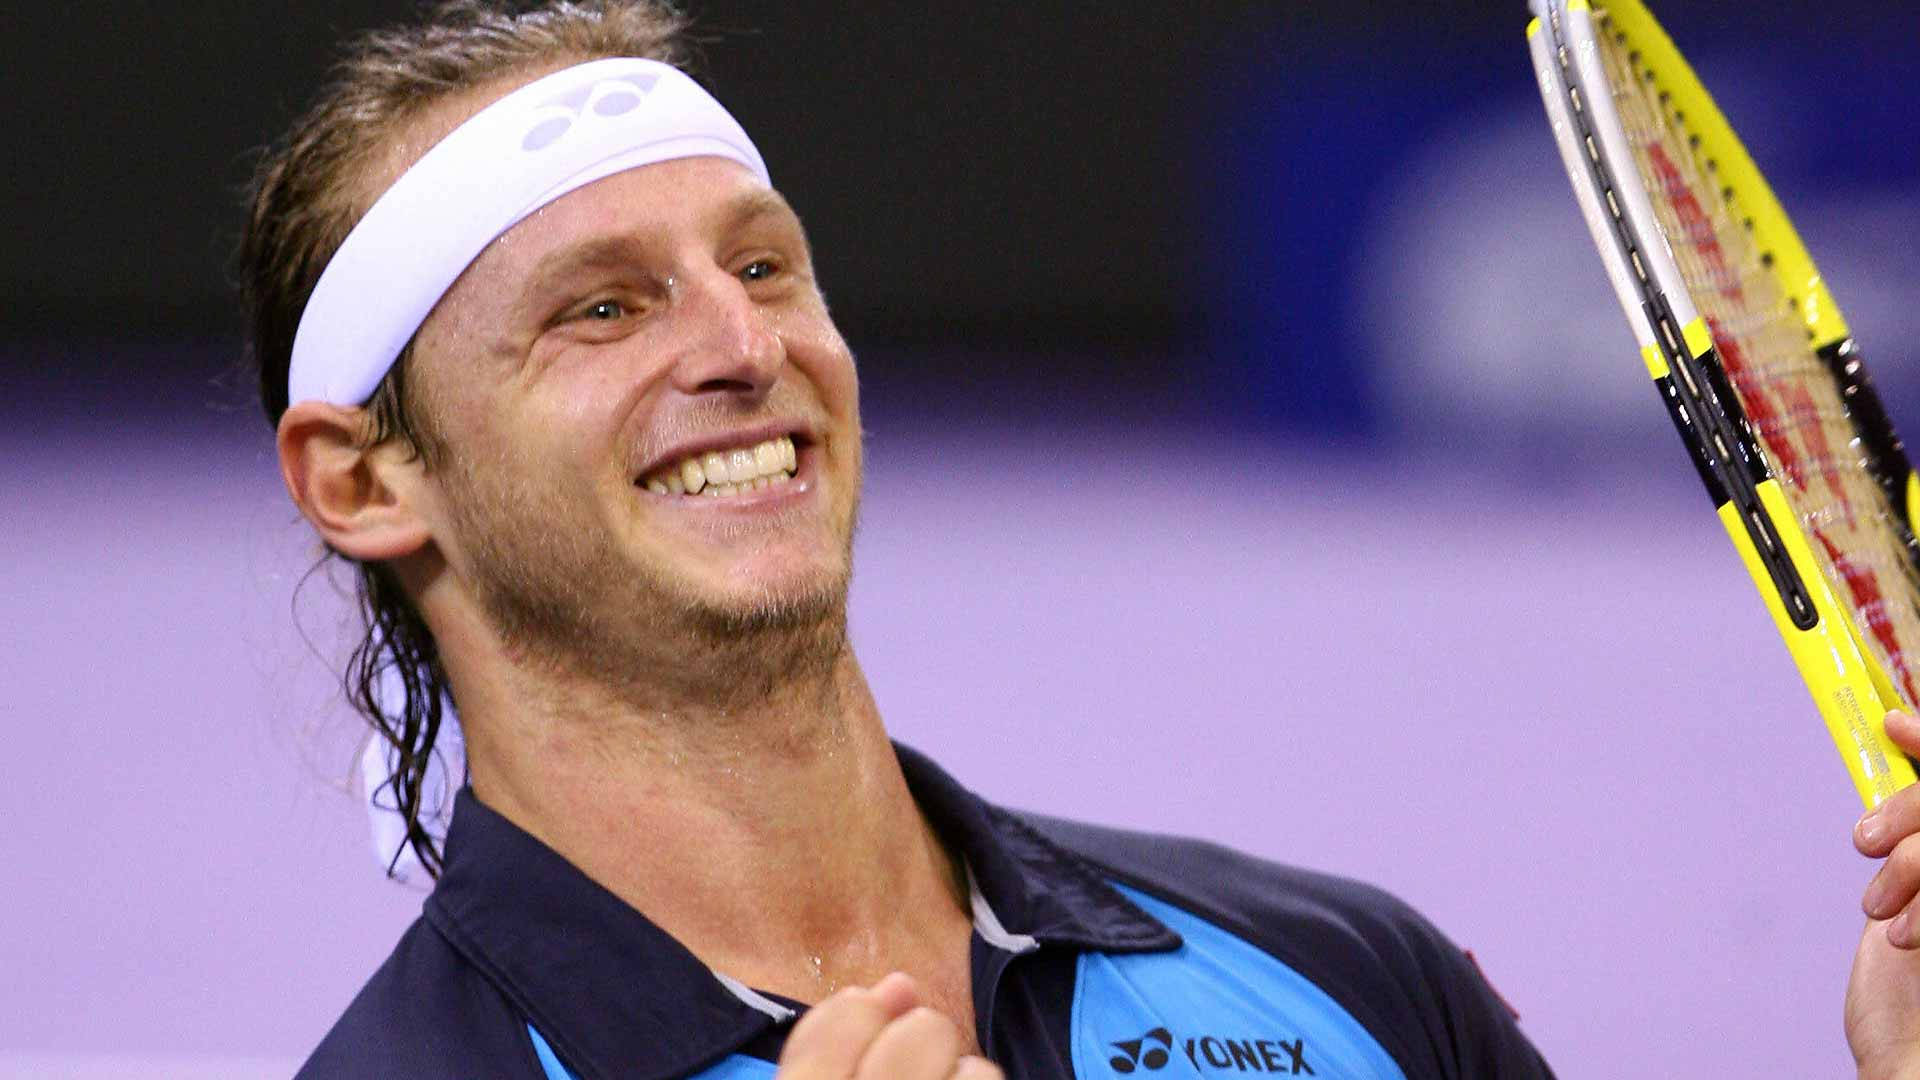 Caption: Tennis Star David Nalbandian's Winning Smile Wallpaper